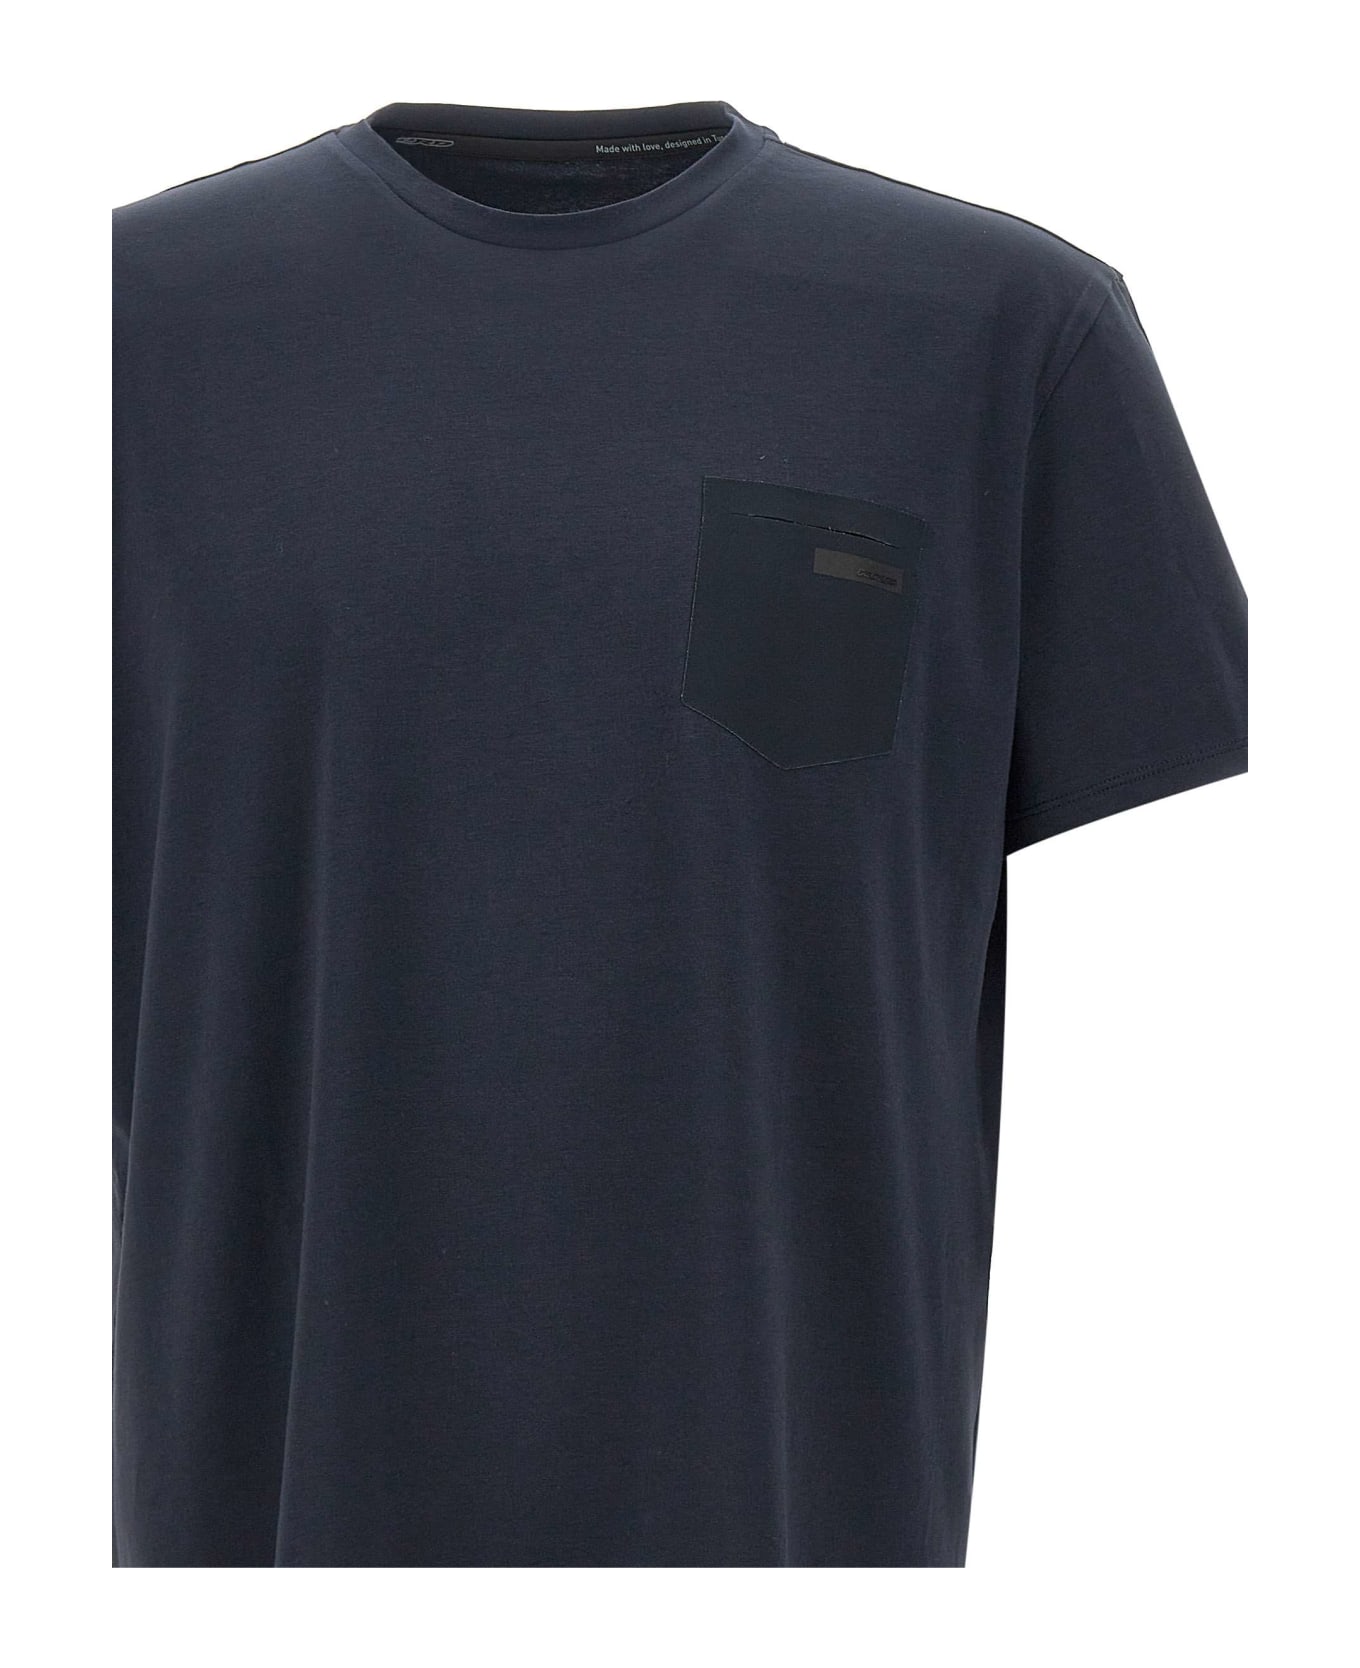 RRD - Roberto Ricci Design "revo Shirty" T-shirt - BLUE